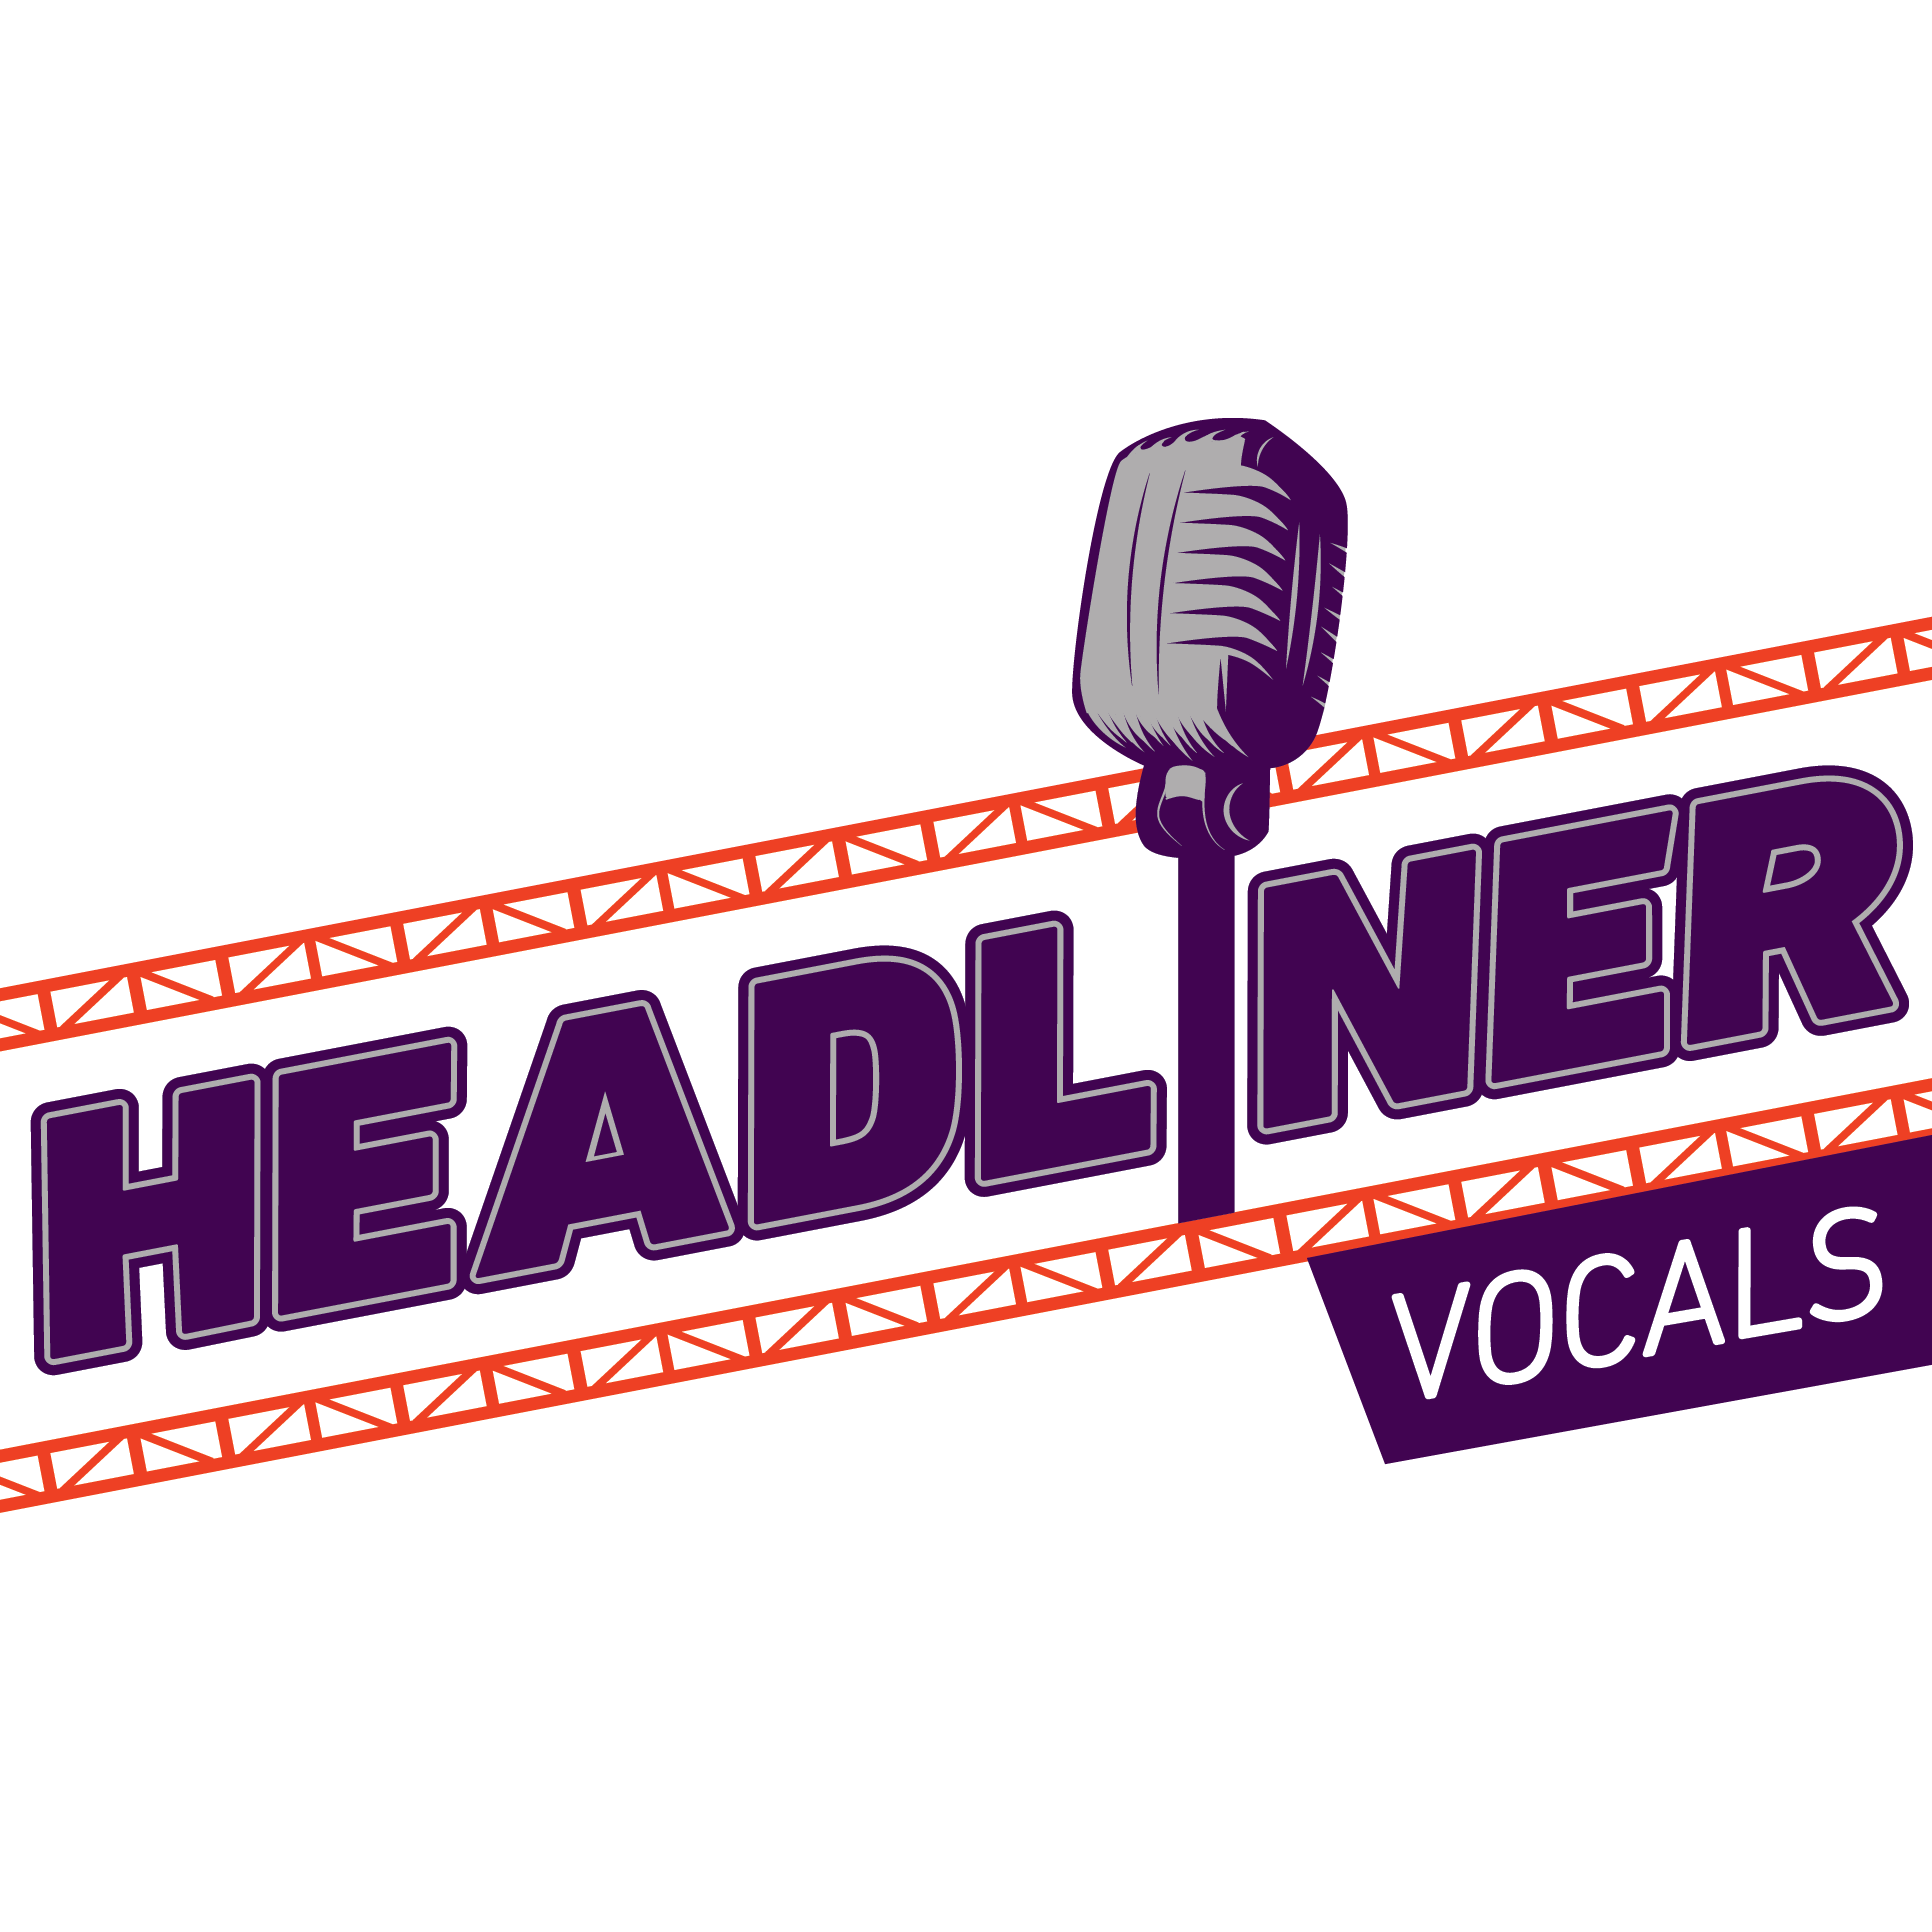 Headliner Vocals Logo